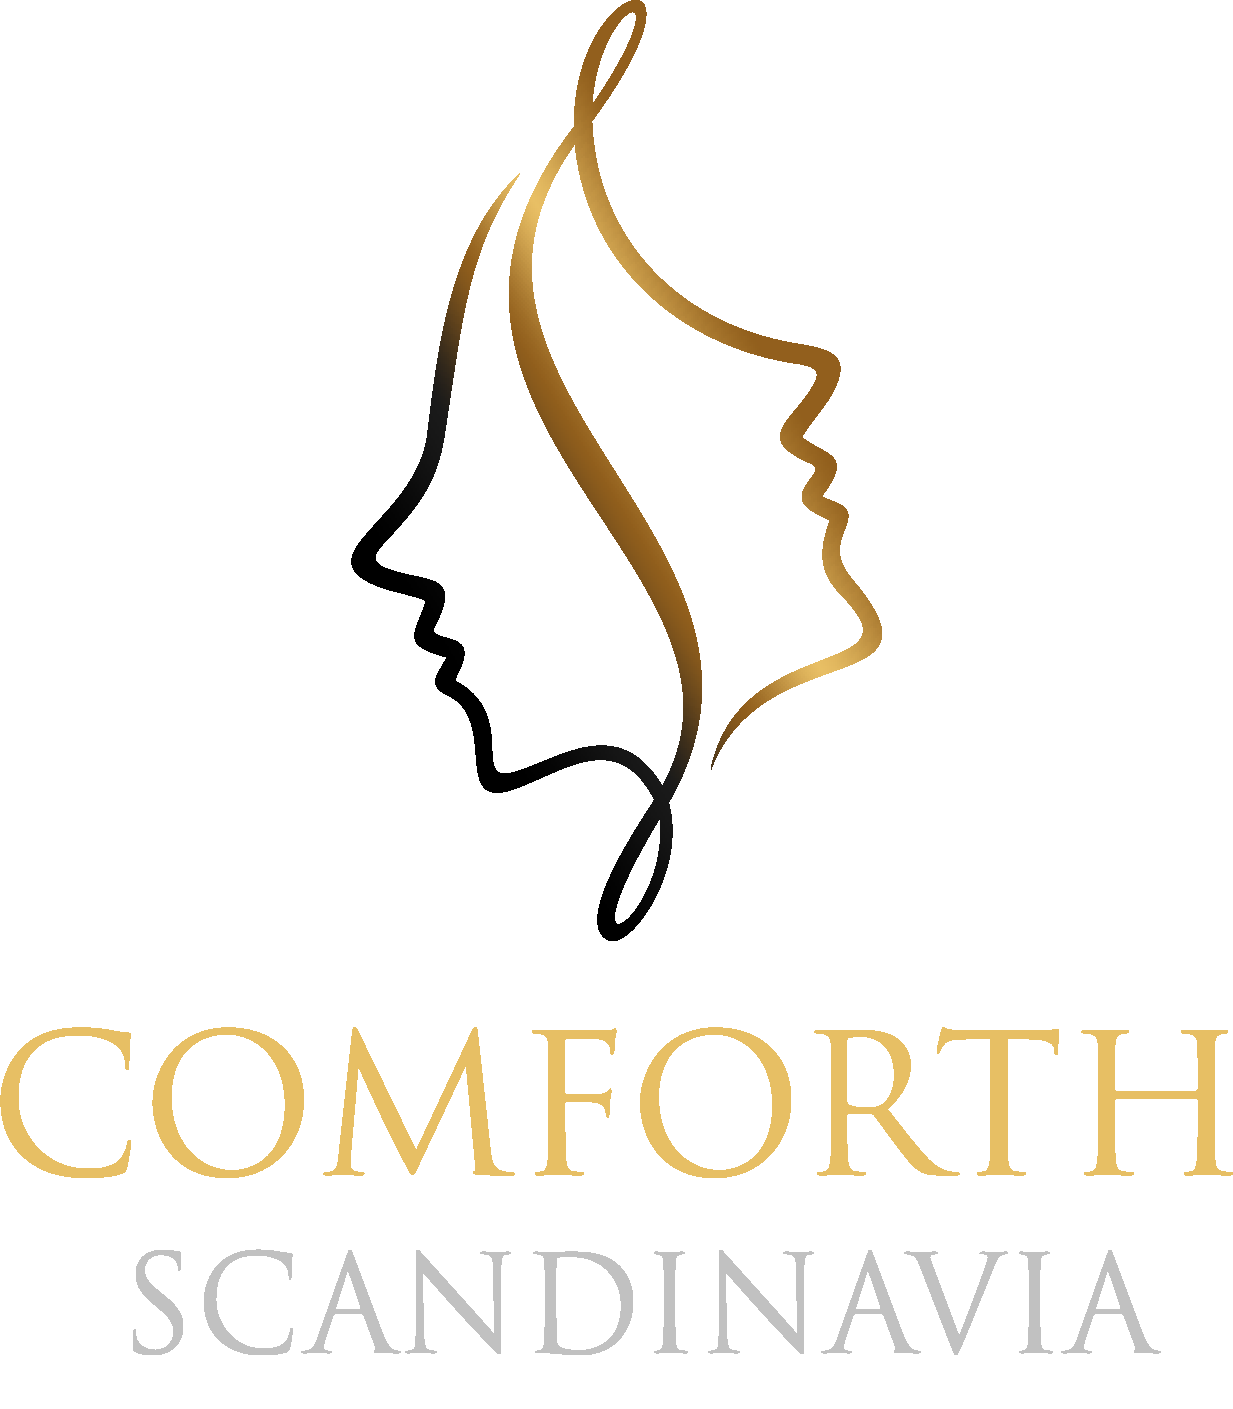 Comforth Scandinavia